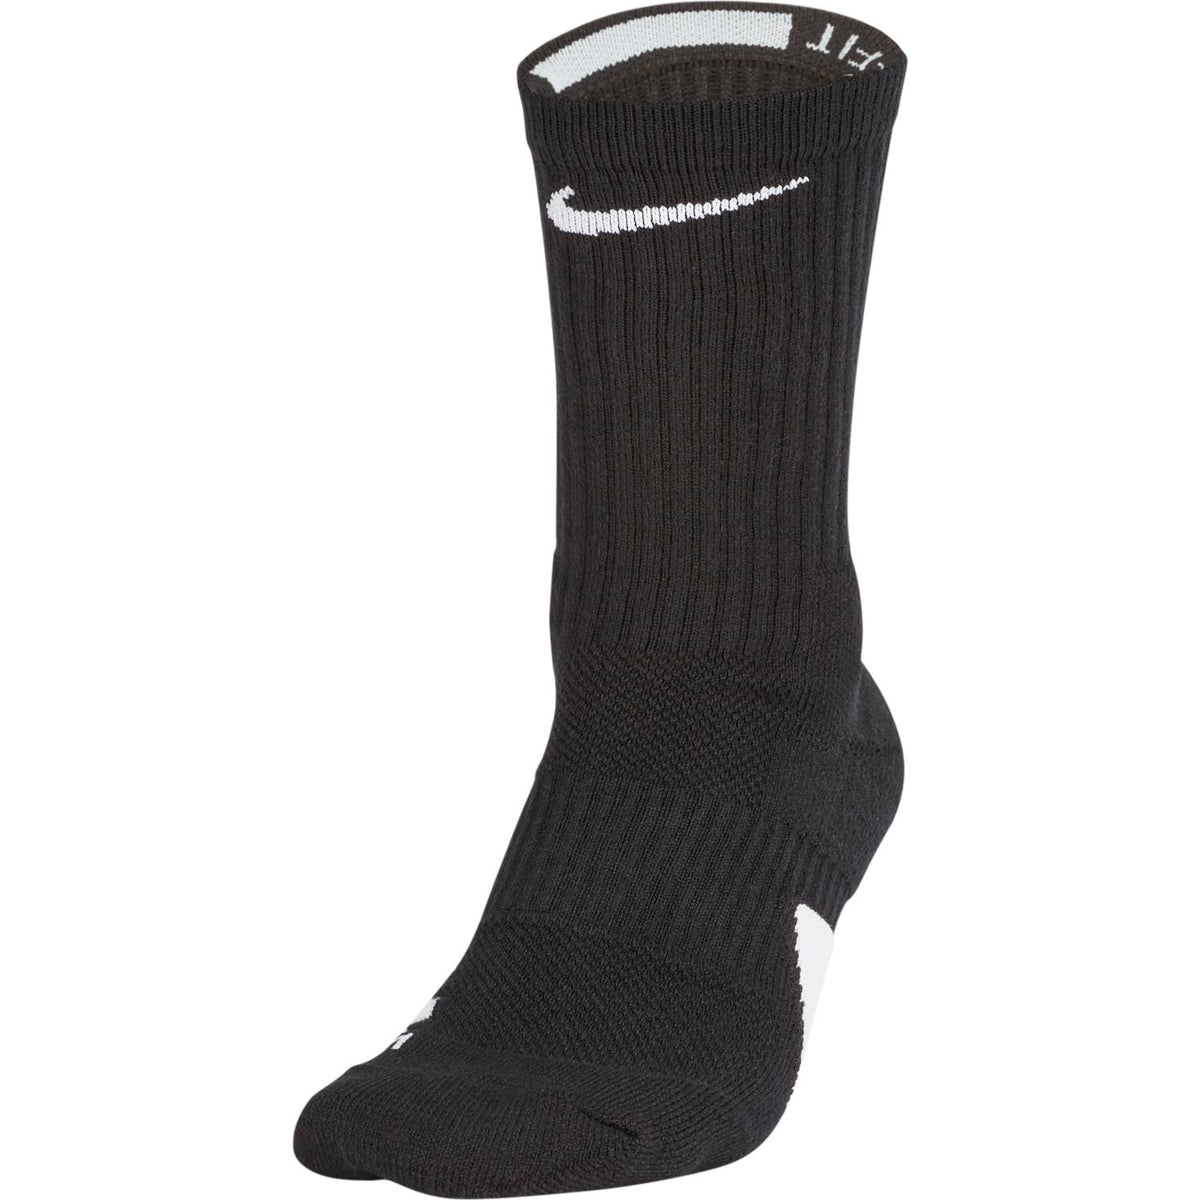 nike elite socks black and white